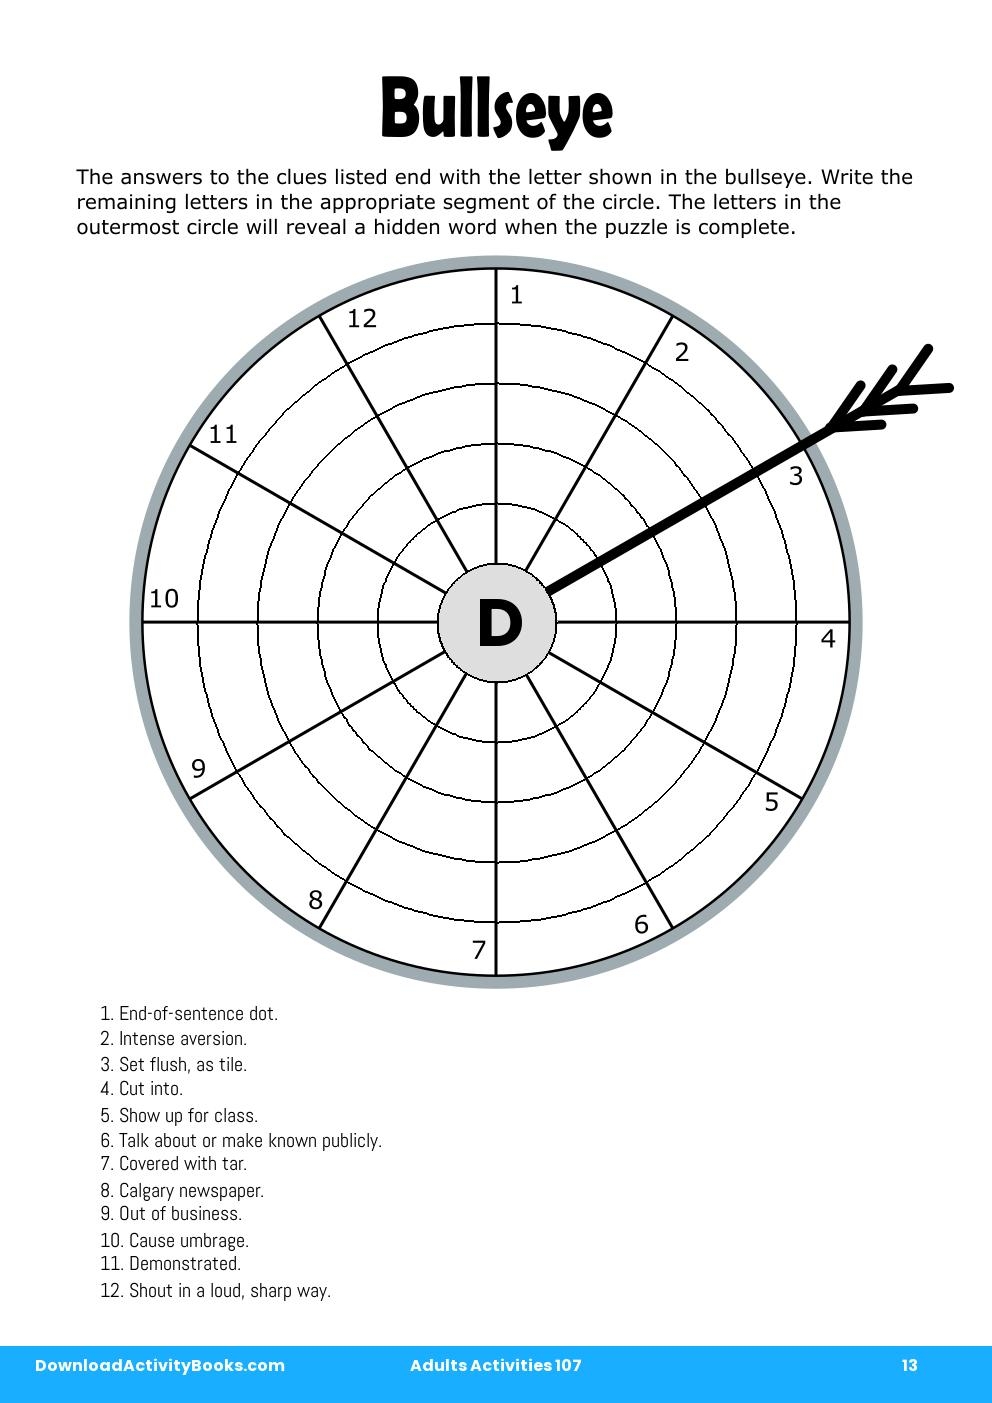 Bullseye in Adults Activities 107